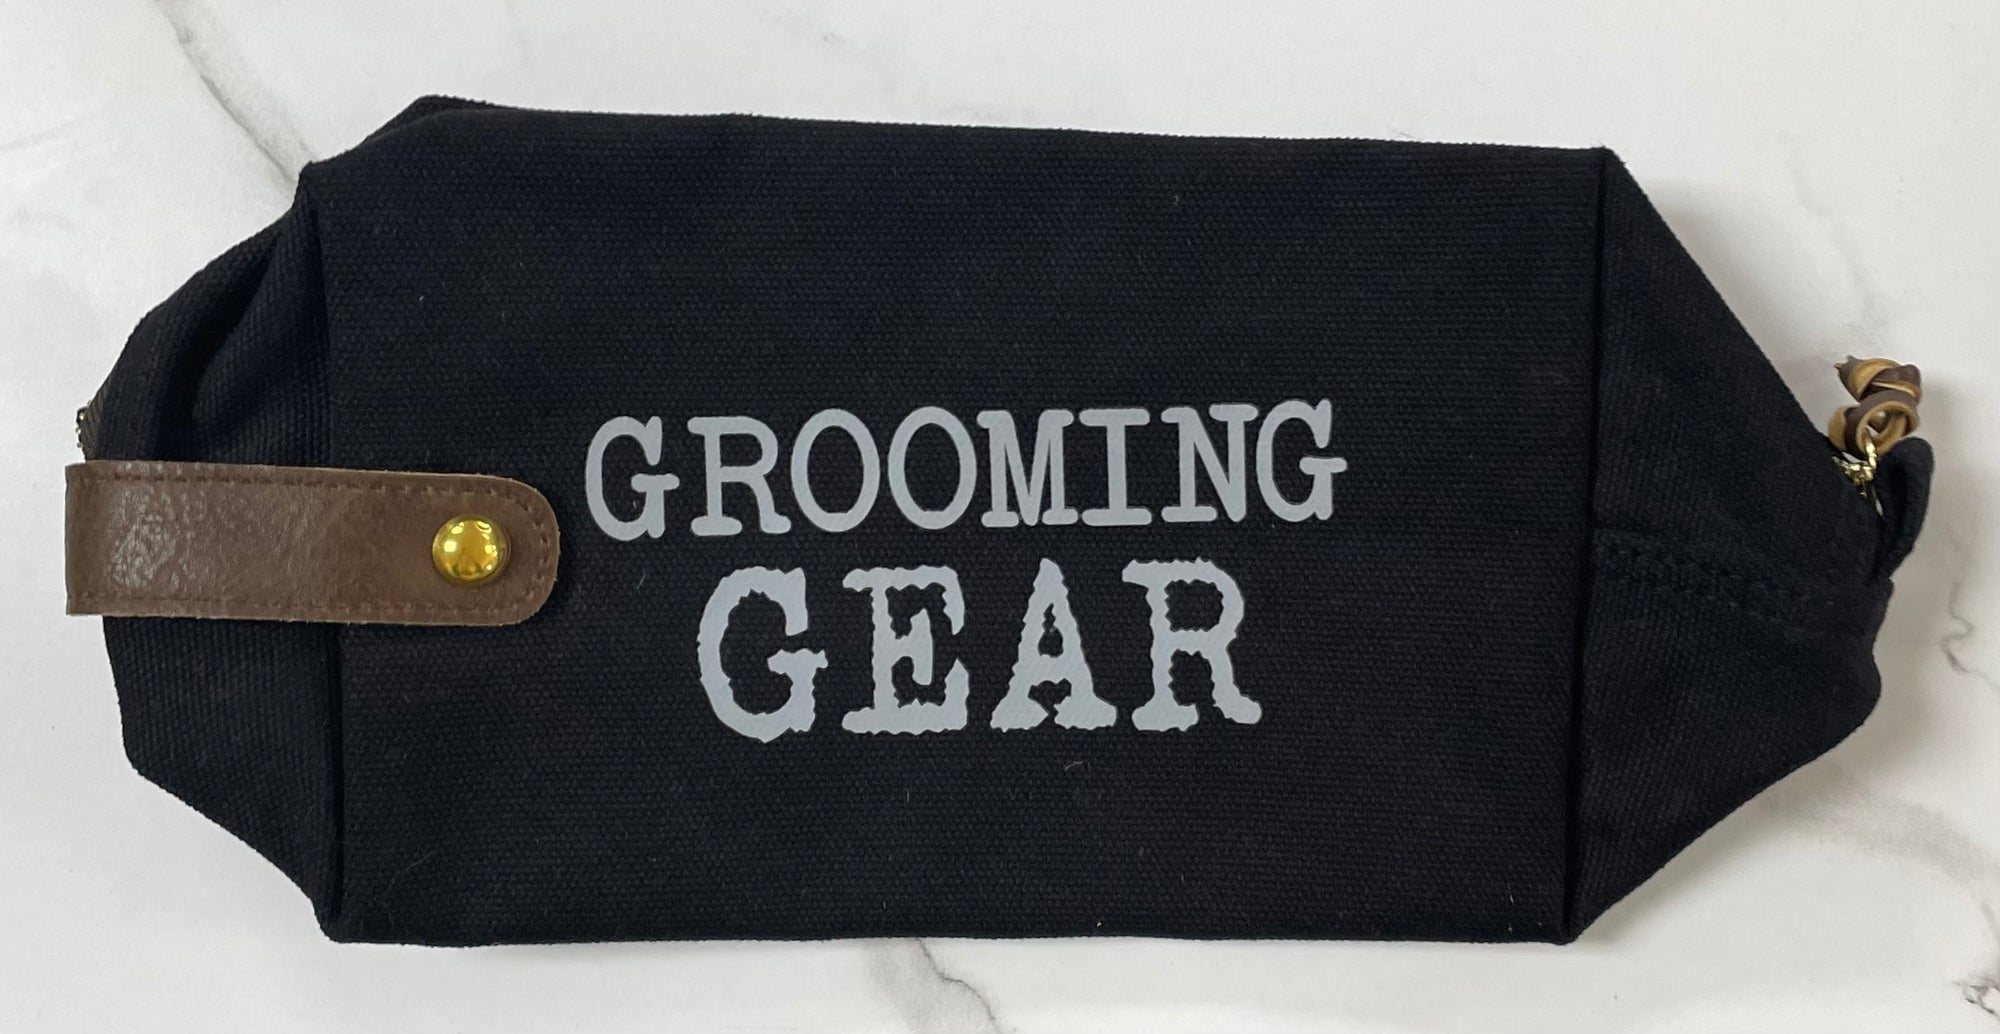 CLEARANCE Grooming Gear Toiletries Bag